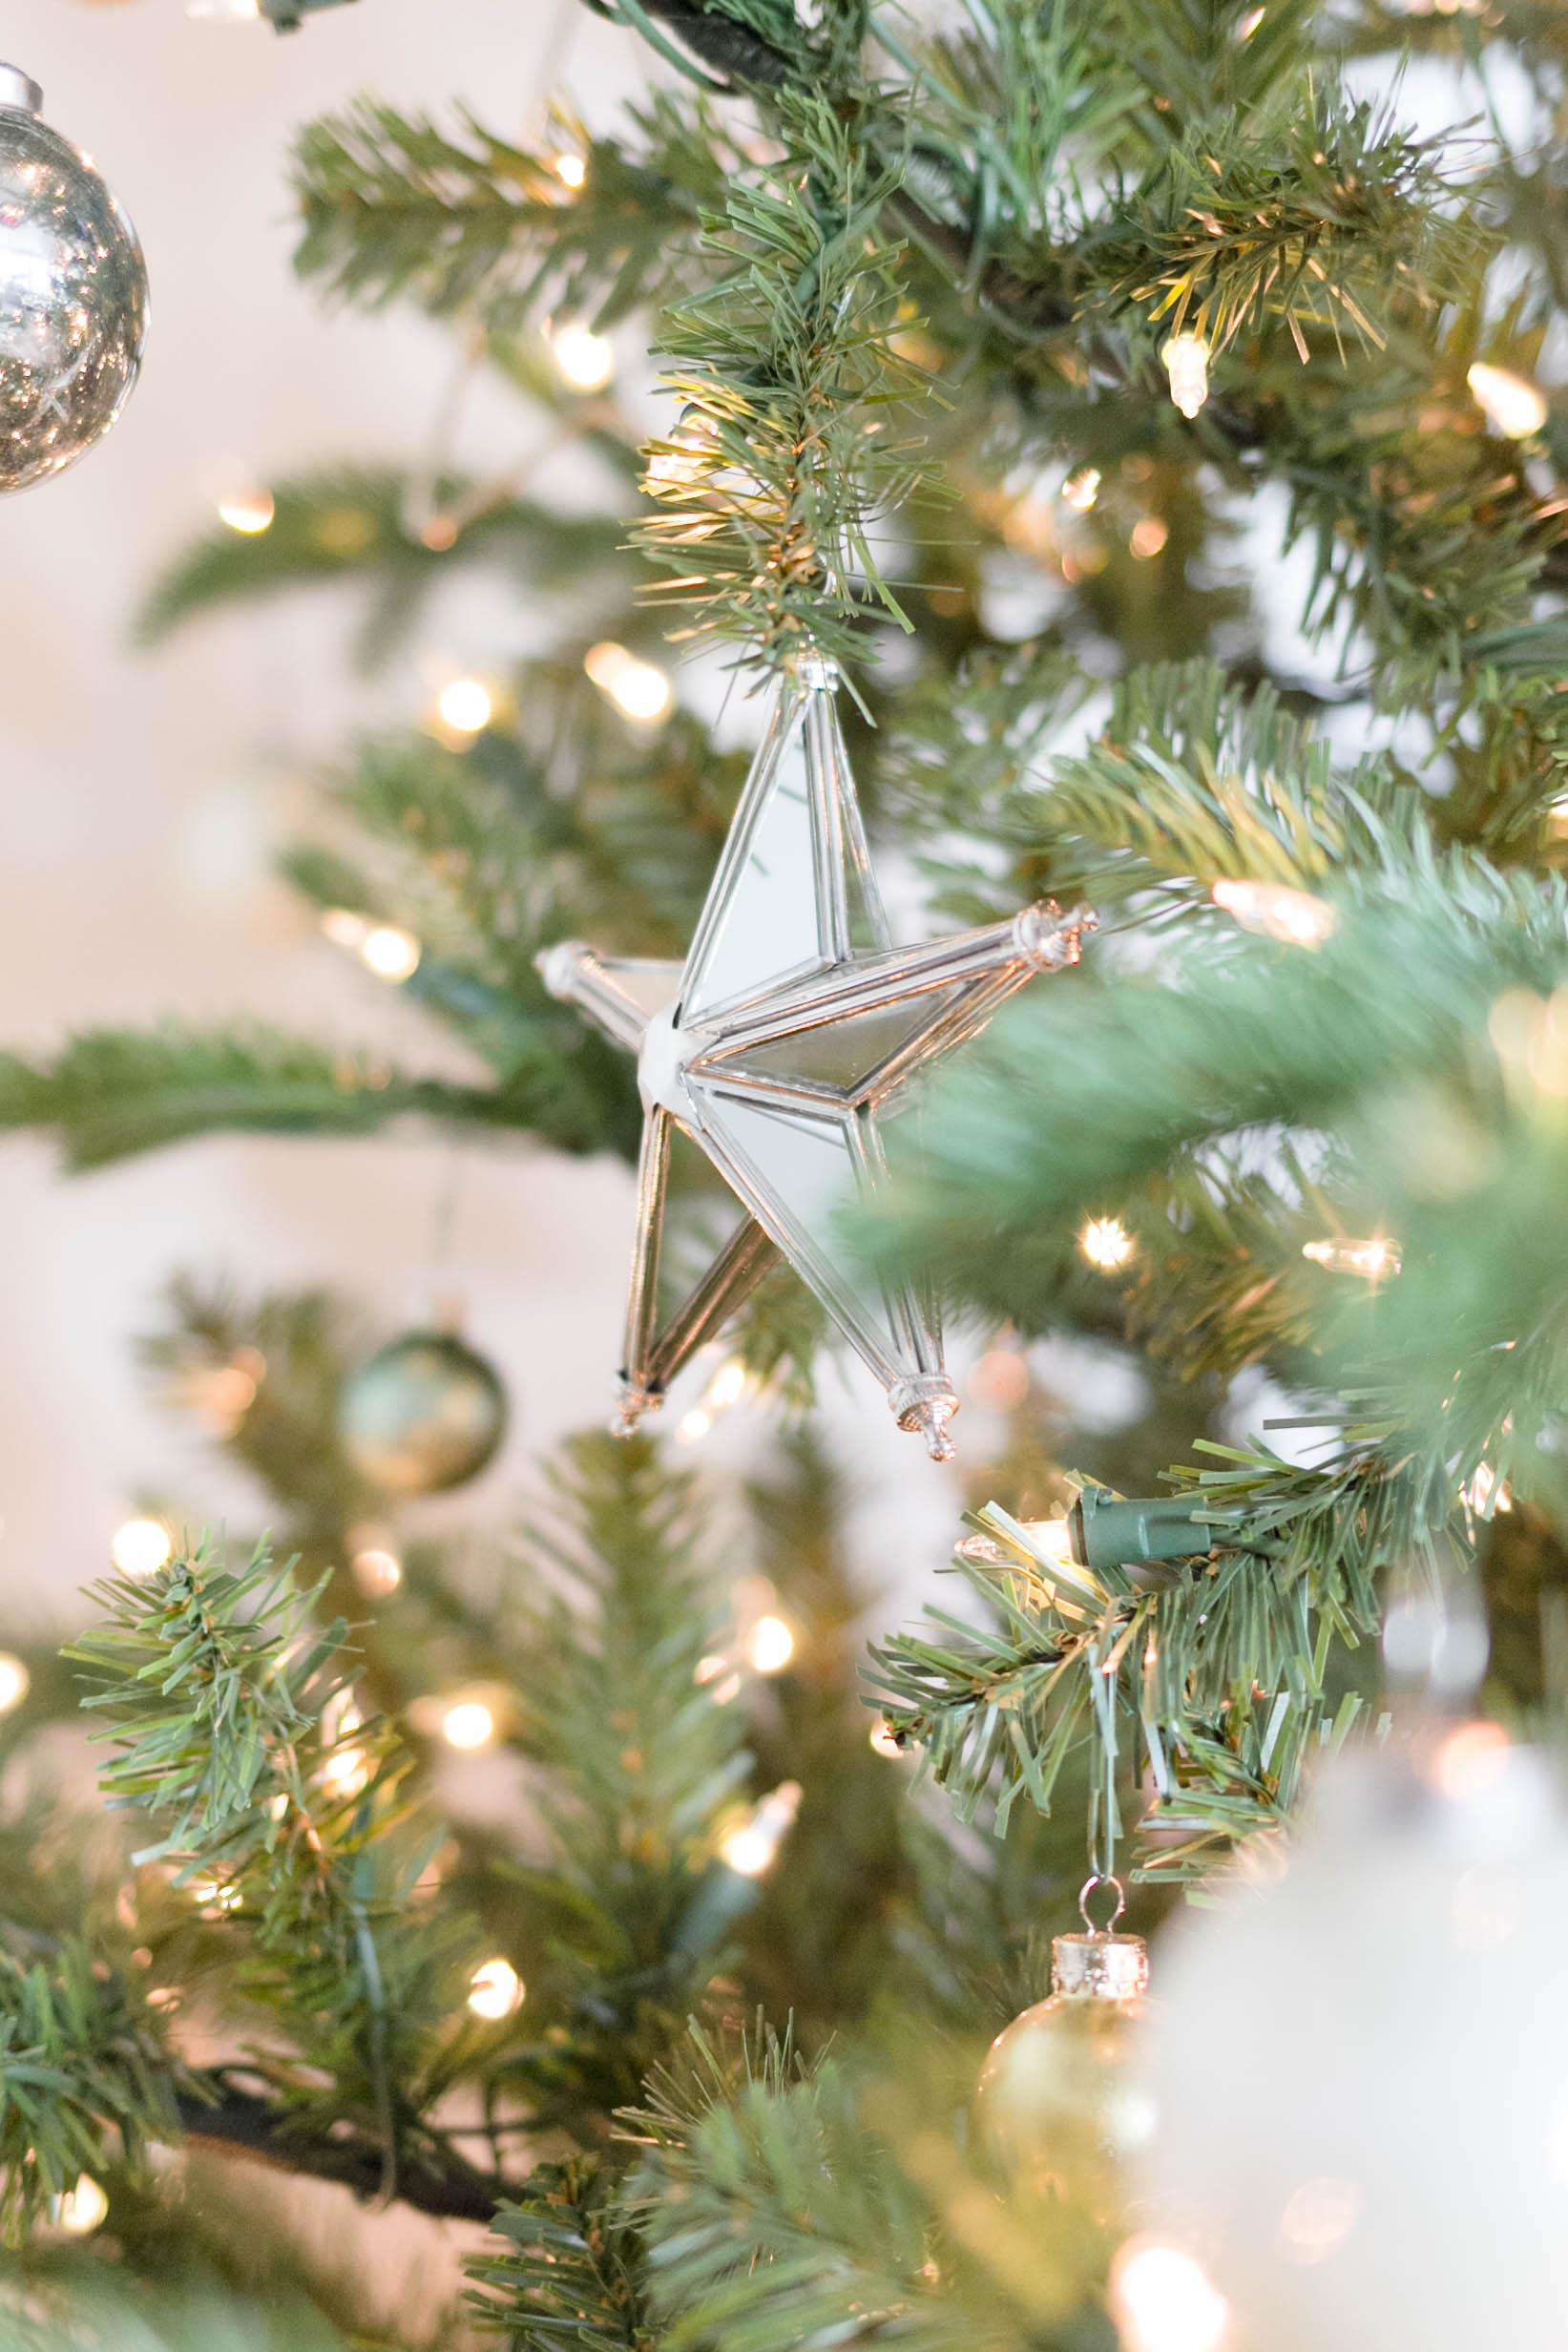 My Home Style Blog Hop Christmas Tree Edition IrisNacole.com 2017-SImple Vintage Decorating